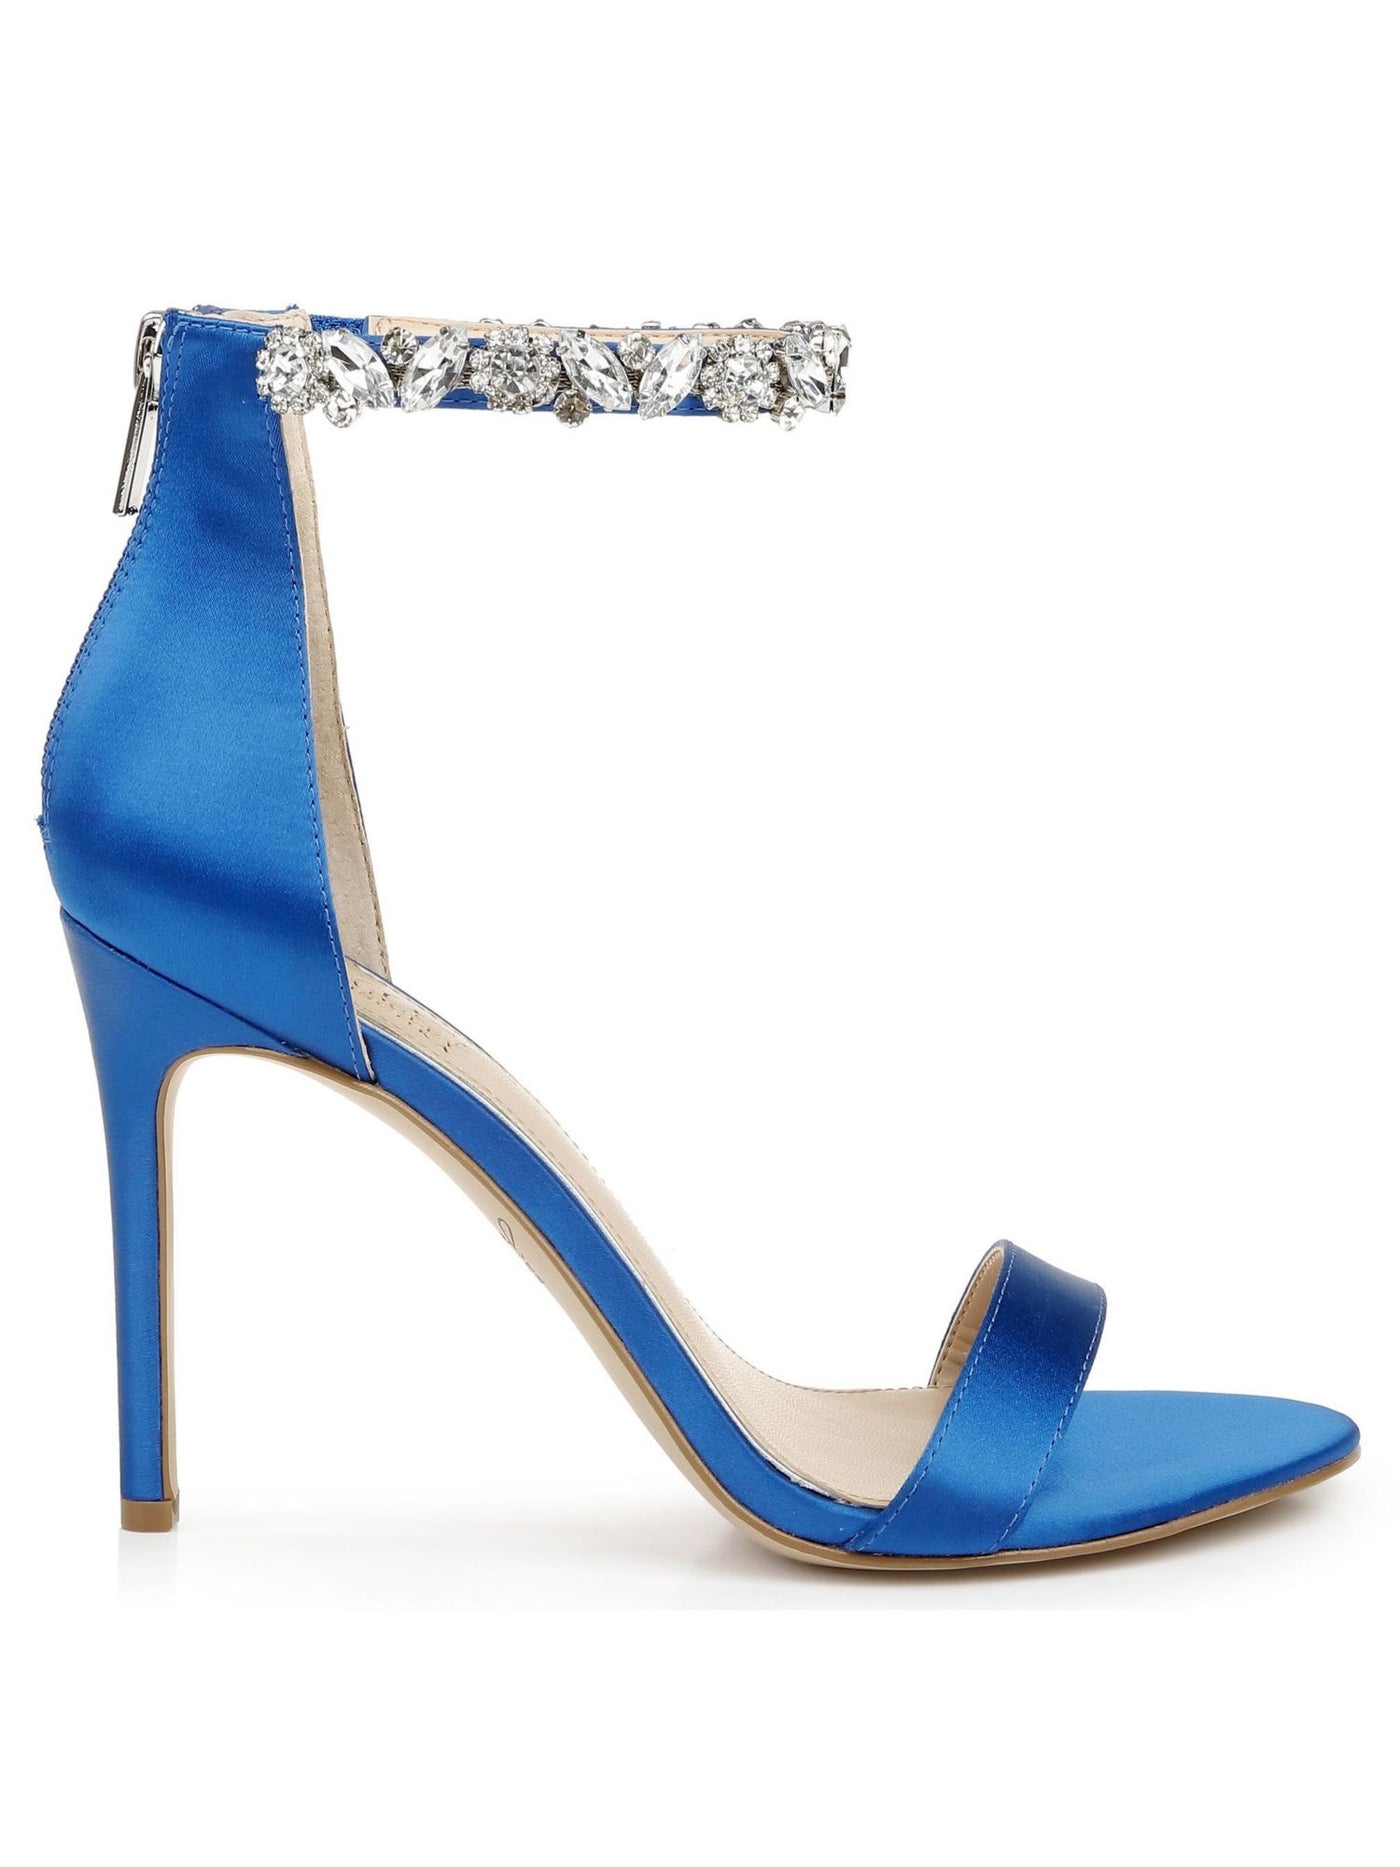 JEWEL BADGLEY MISCHKA Womens Blue Rhinestone Jax Open Toe Stiletto Zip-Up Dress Heeled Sandal 7.5 M